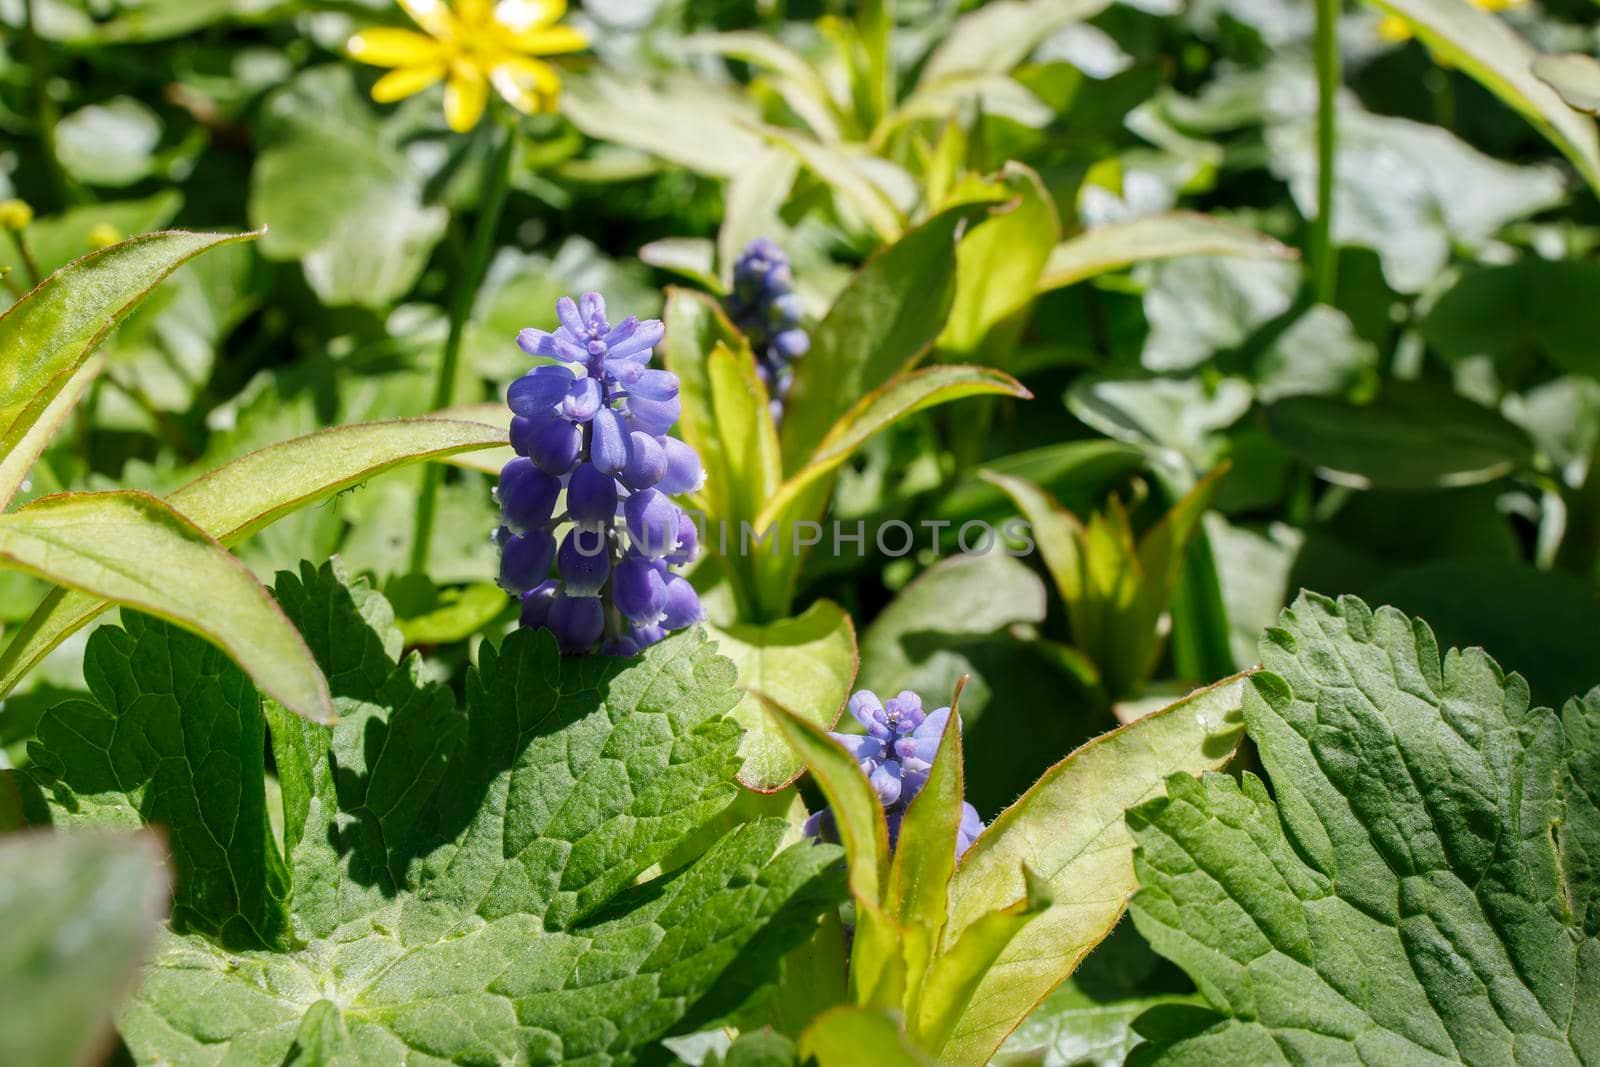 Muscari flower. Muscari armeniacum.Grape Hyacinth.Spring flowers. Blue muscari in the sun on a blurred vegetable background. Floral spring background. by elenarostunova